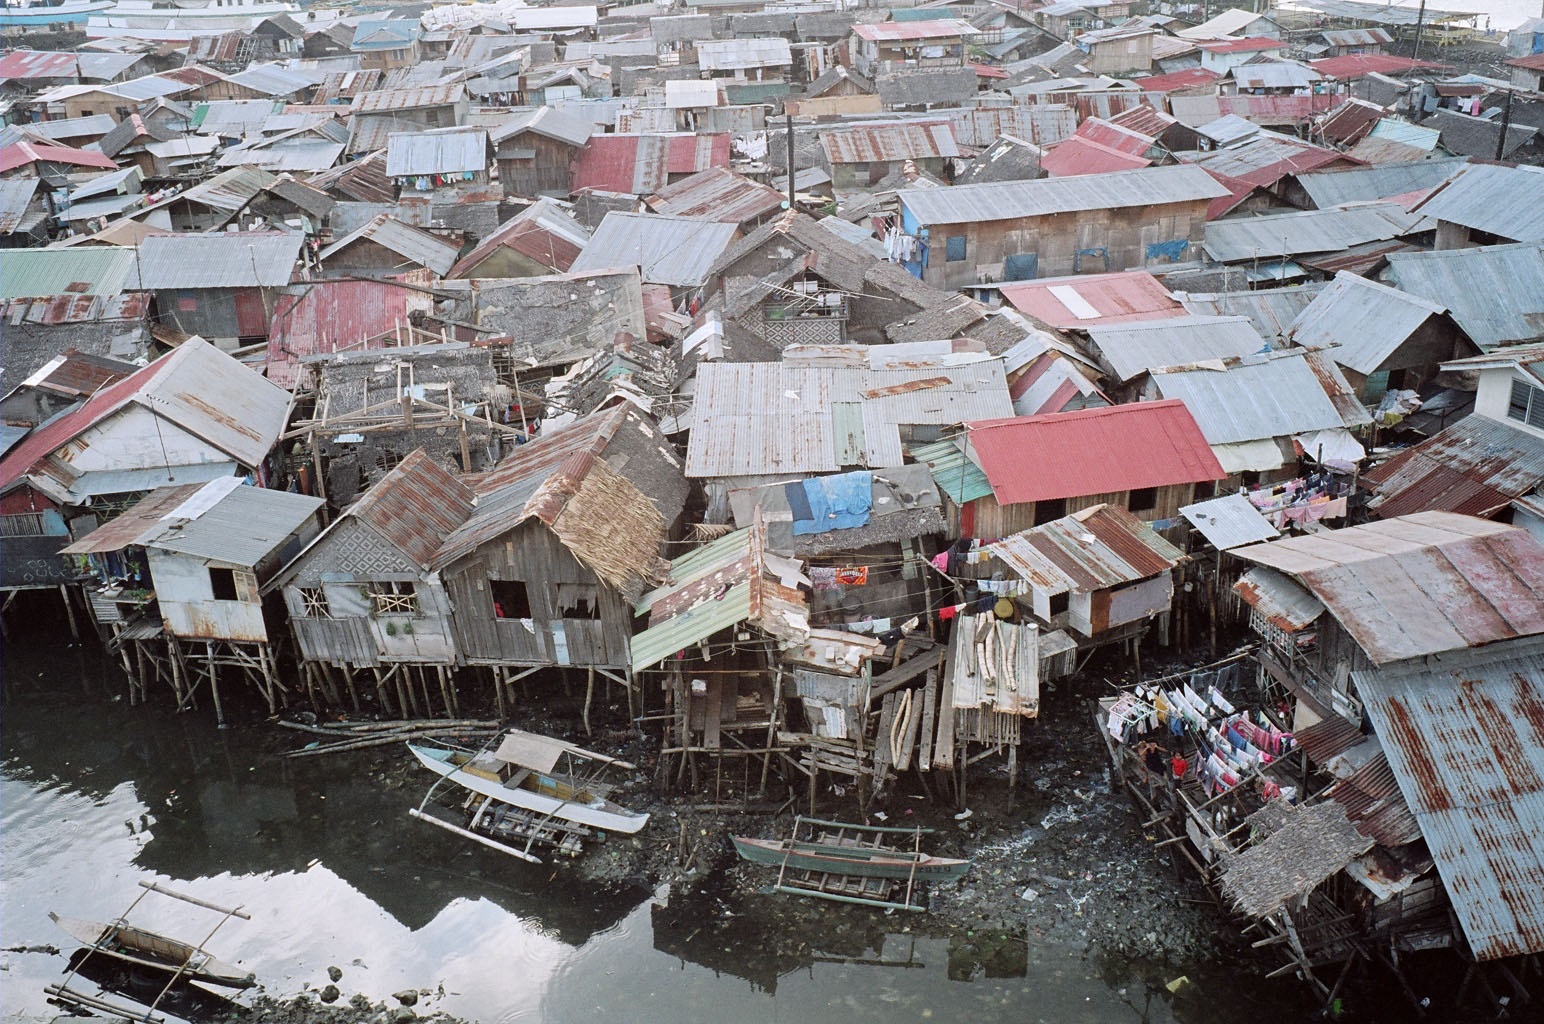 One of the informal settlements where SDI works